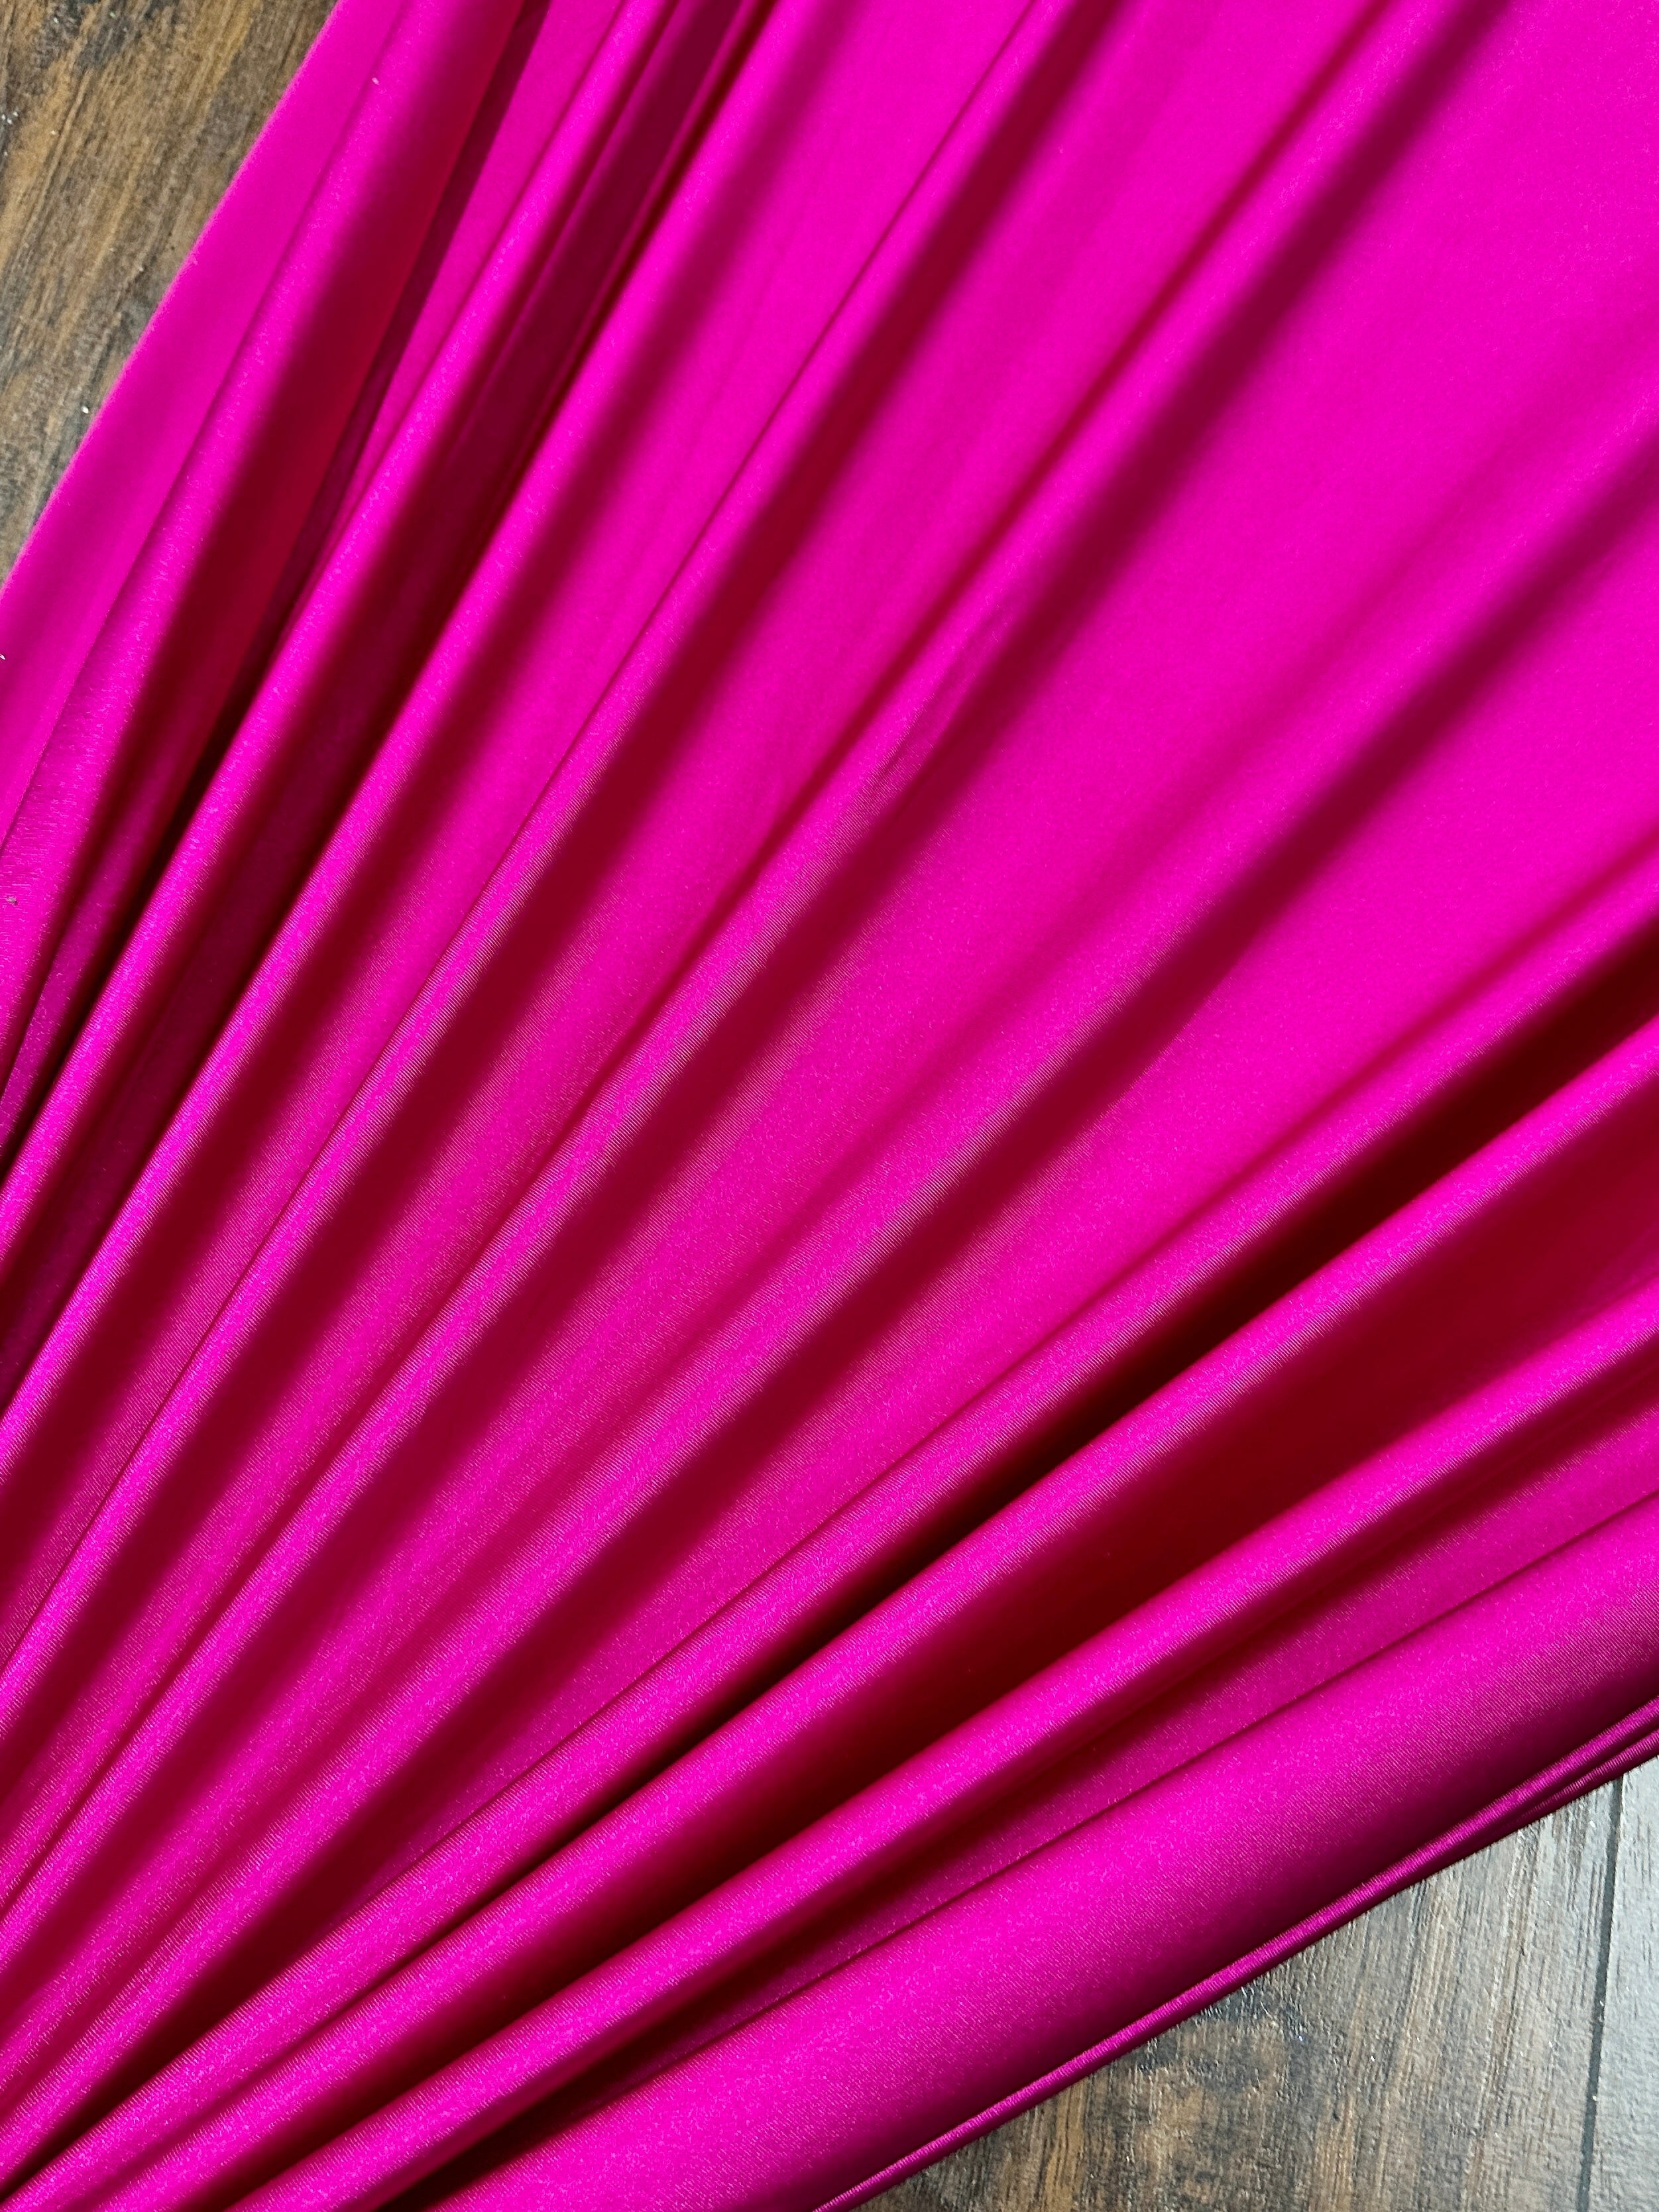 fuchsia nylon spandex, pink nylon spandex, rose pink nylon spandex, light pink nylon spandex, maroon nylon spandex, dark pink nylon spandex, fuchsia nylon spandex for bride, pink nylon spandex for woman, spandex on sale, discount spandex, premium spandex